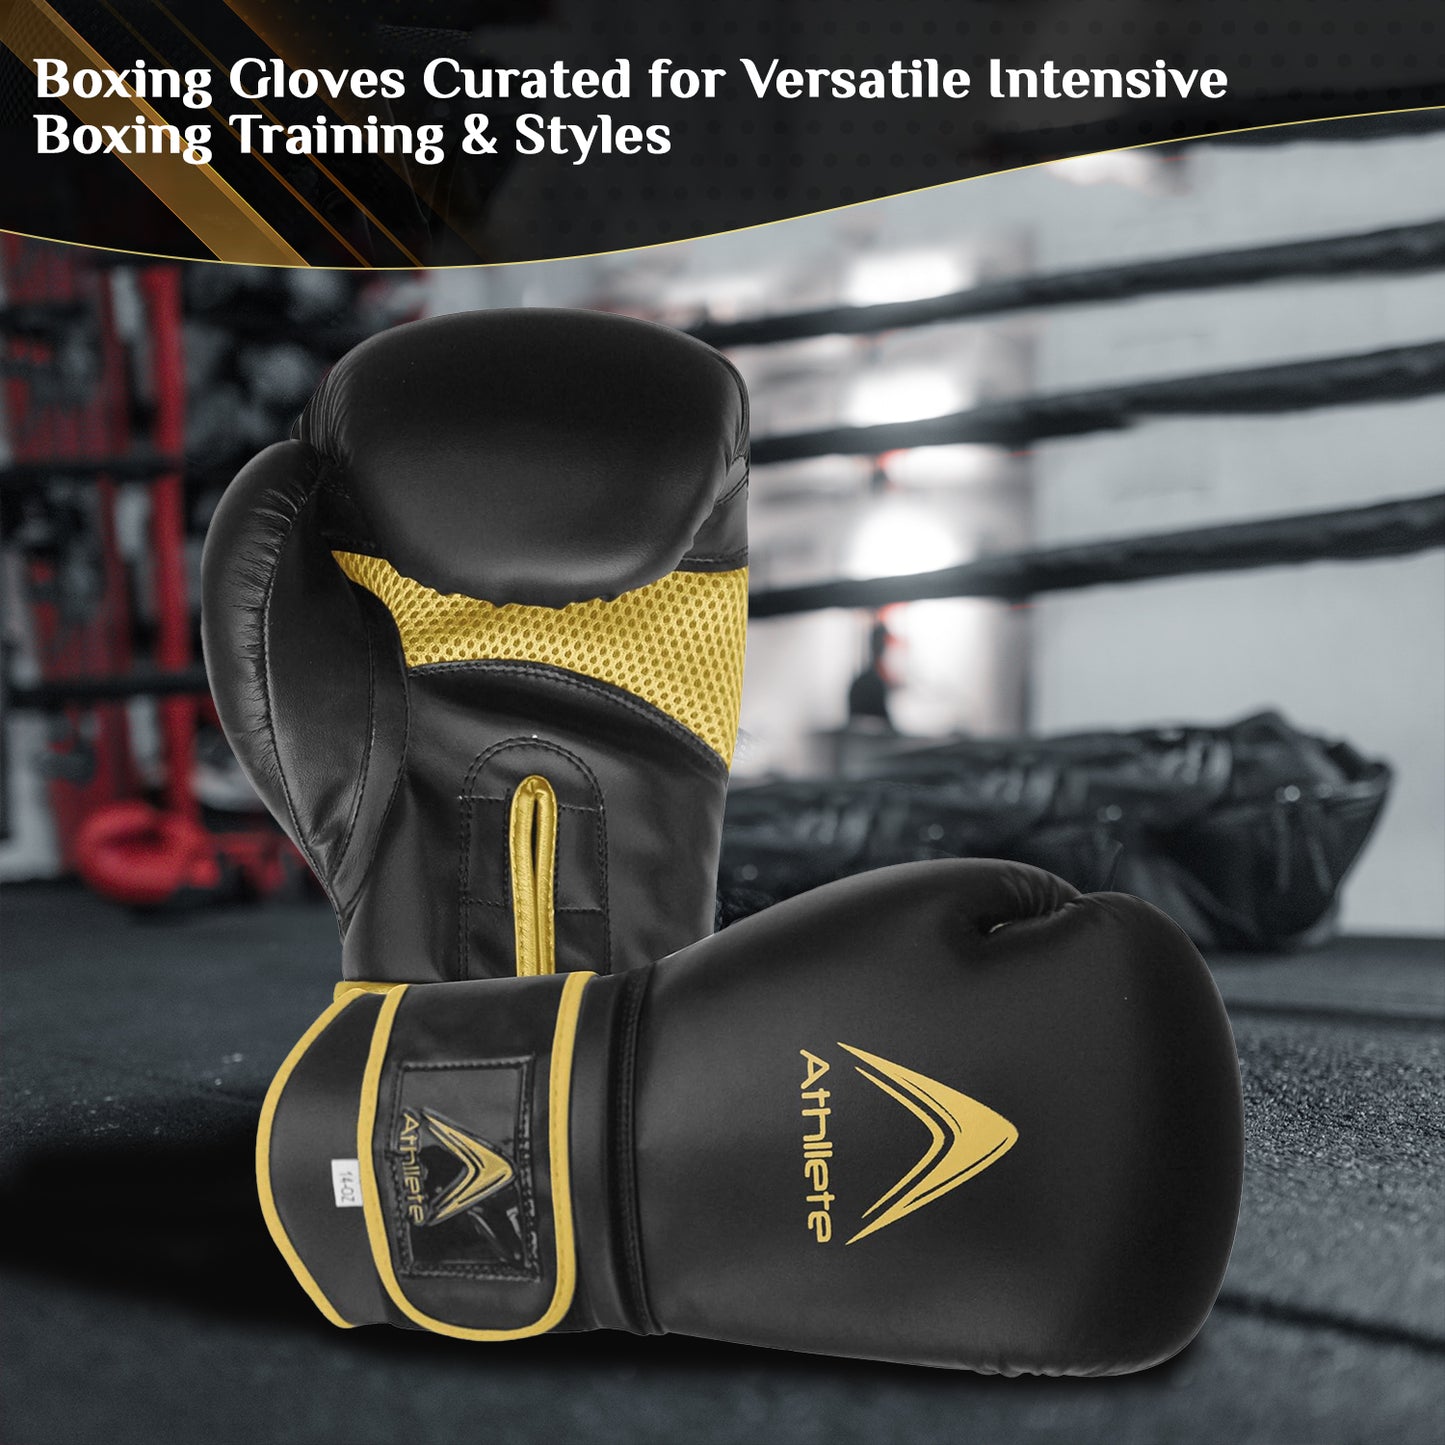 Athllete Training Boxing Gloves